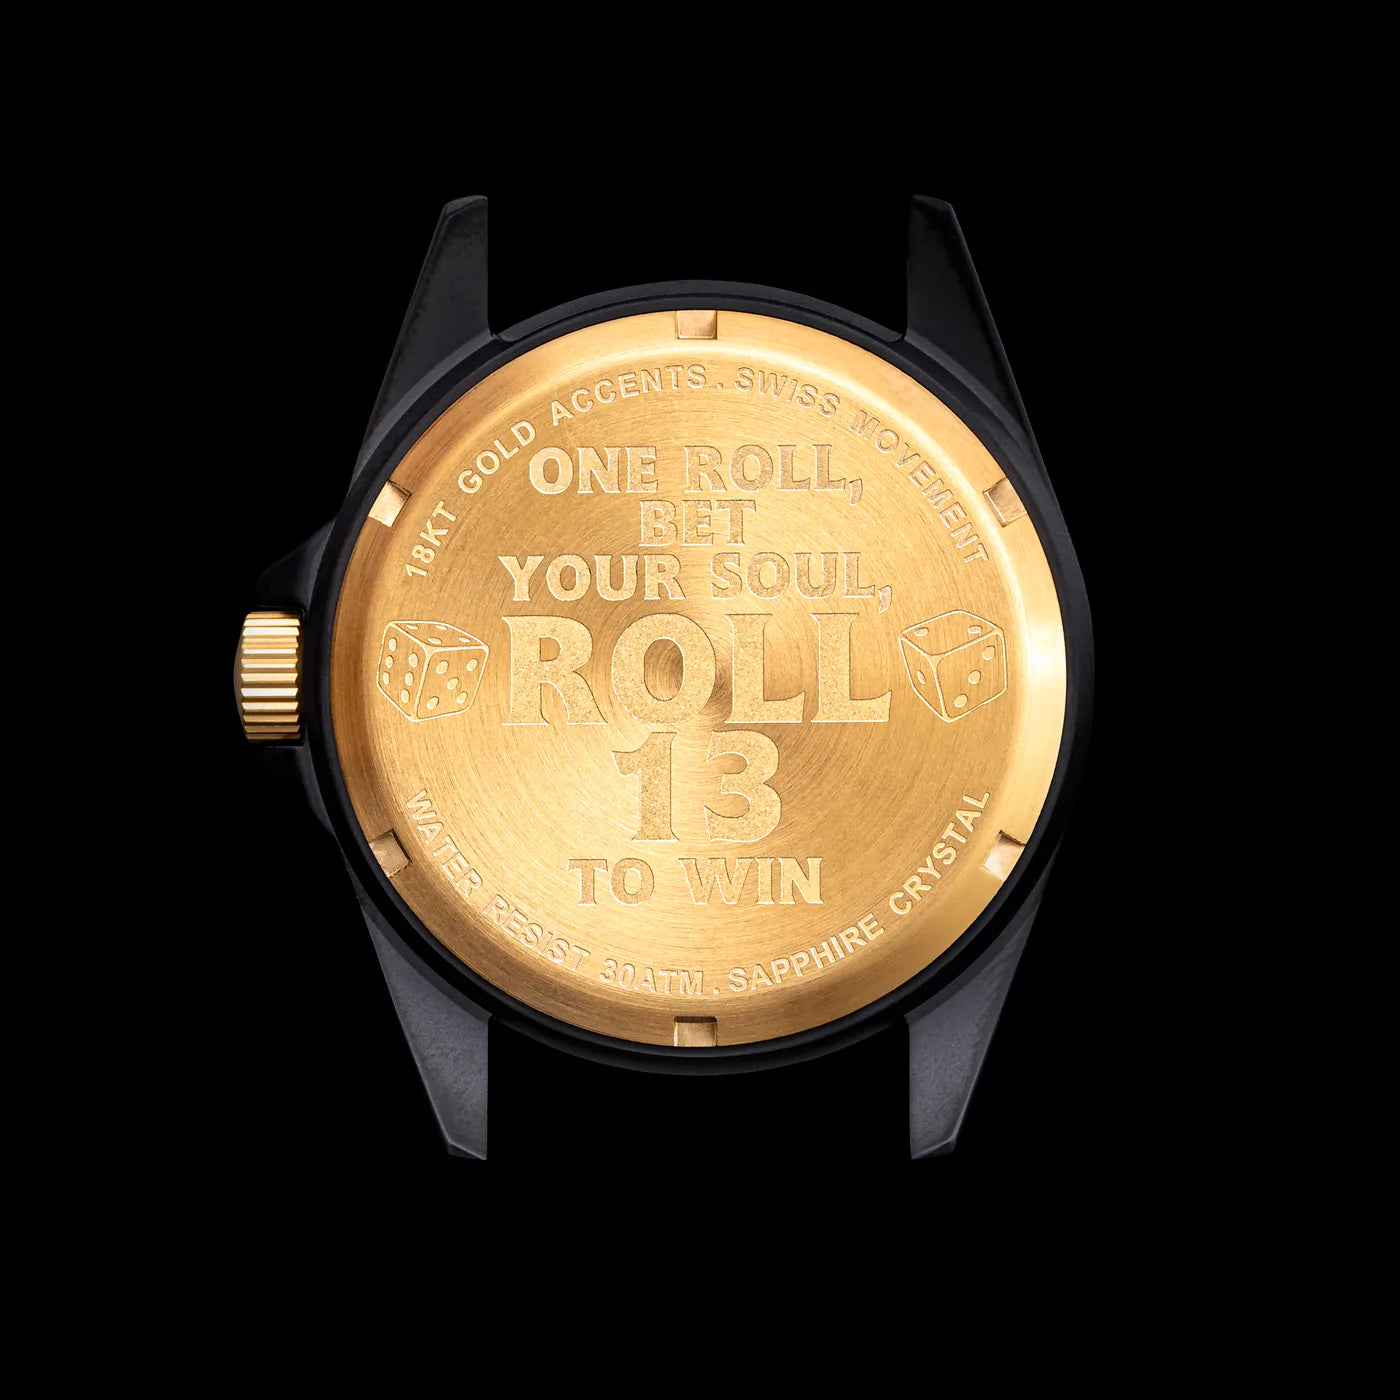 Core Timepieces BLACK GOLD AUTOMATIC DIVER Watch